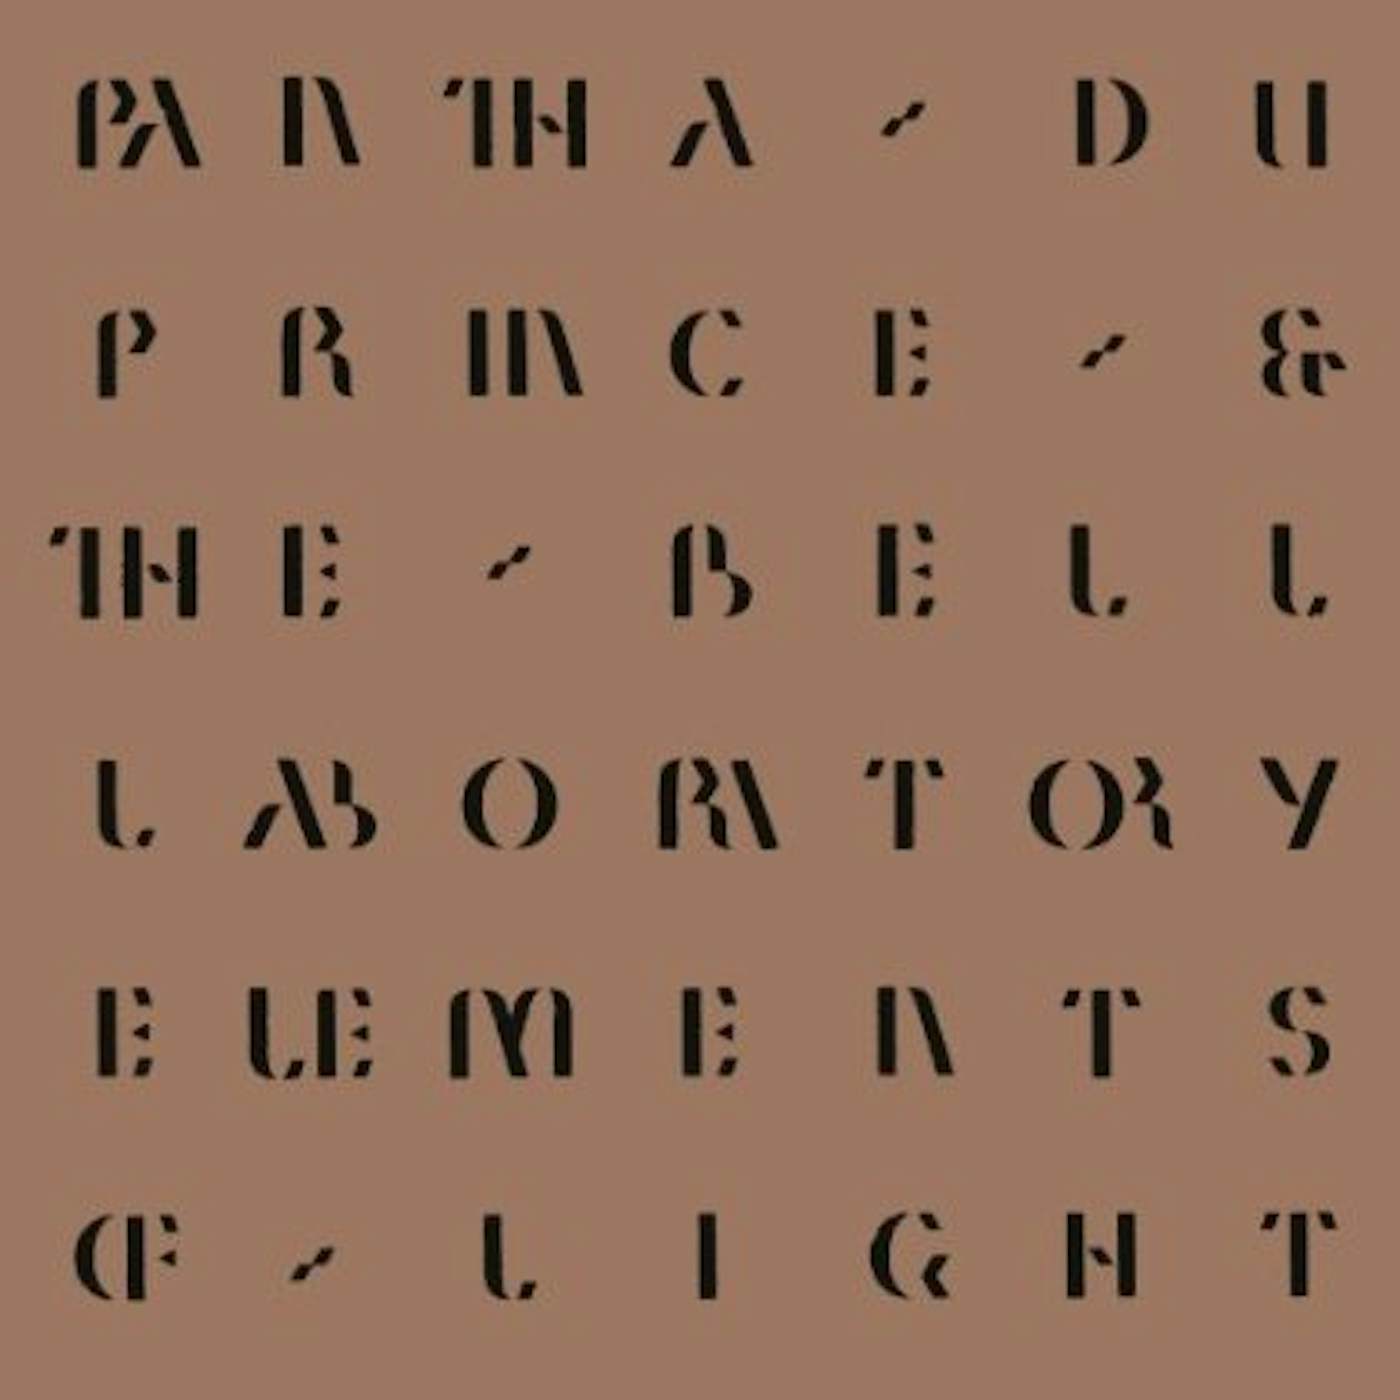 Pantha Du Prince & The Bell Laboratory Elements Of Light Vinyl Record